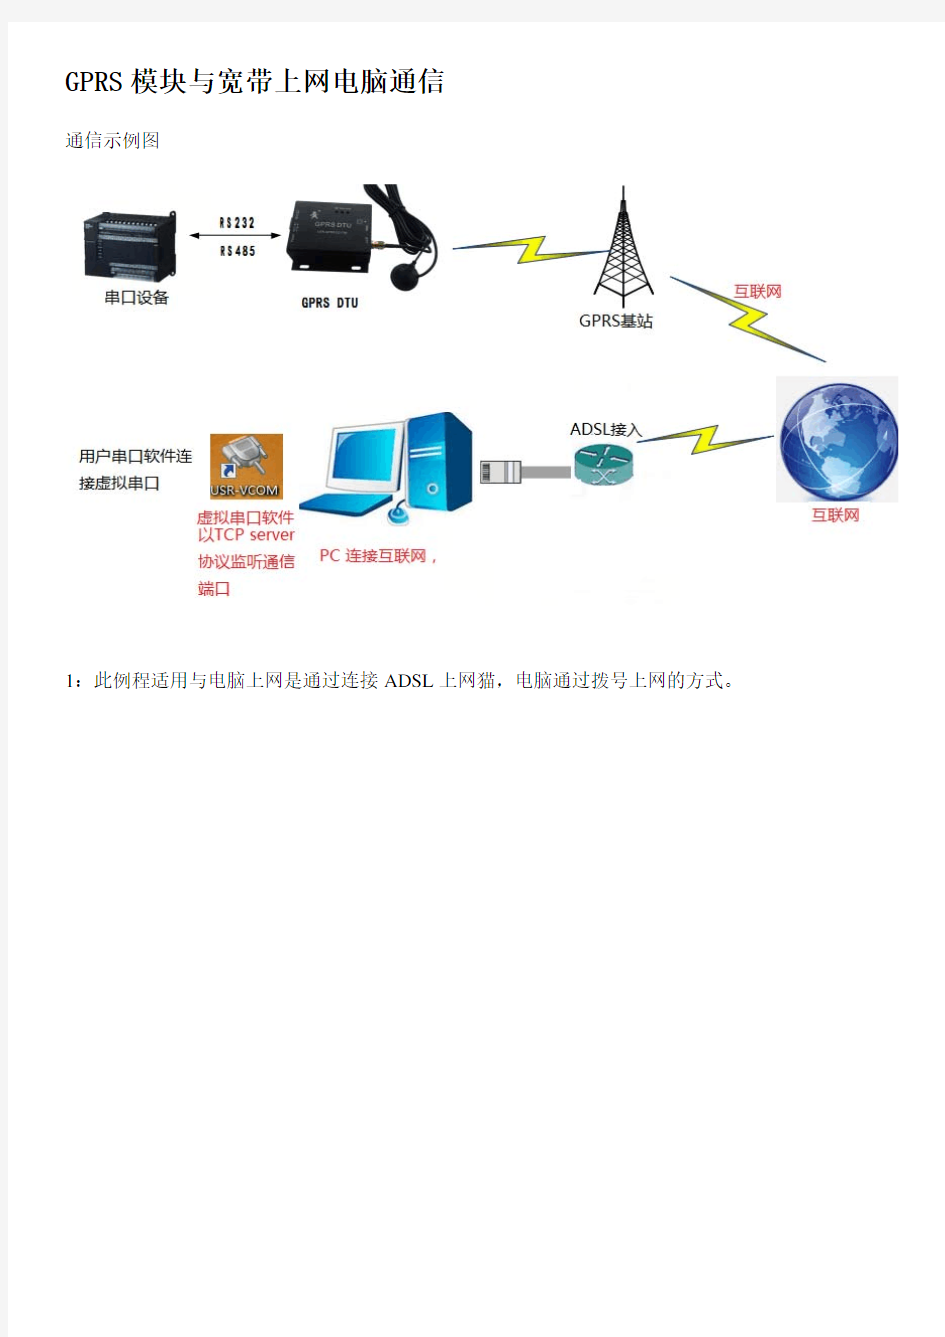 GPRS模块与宽带上网电脑通信